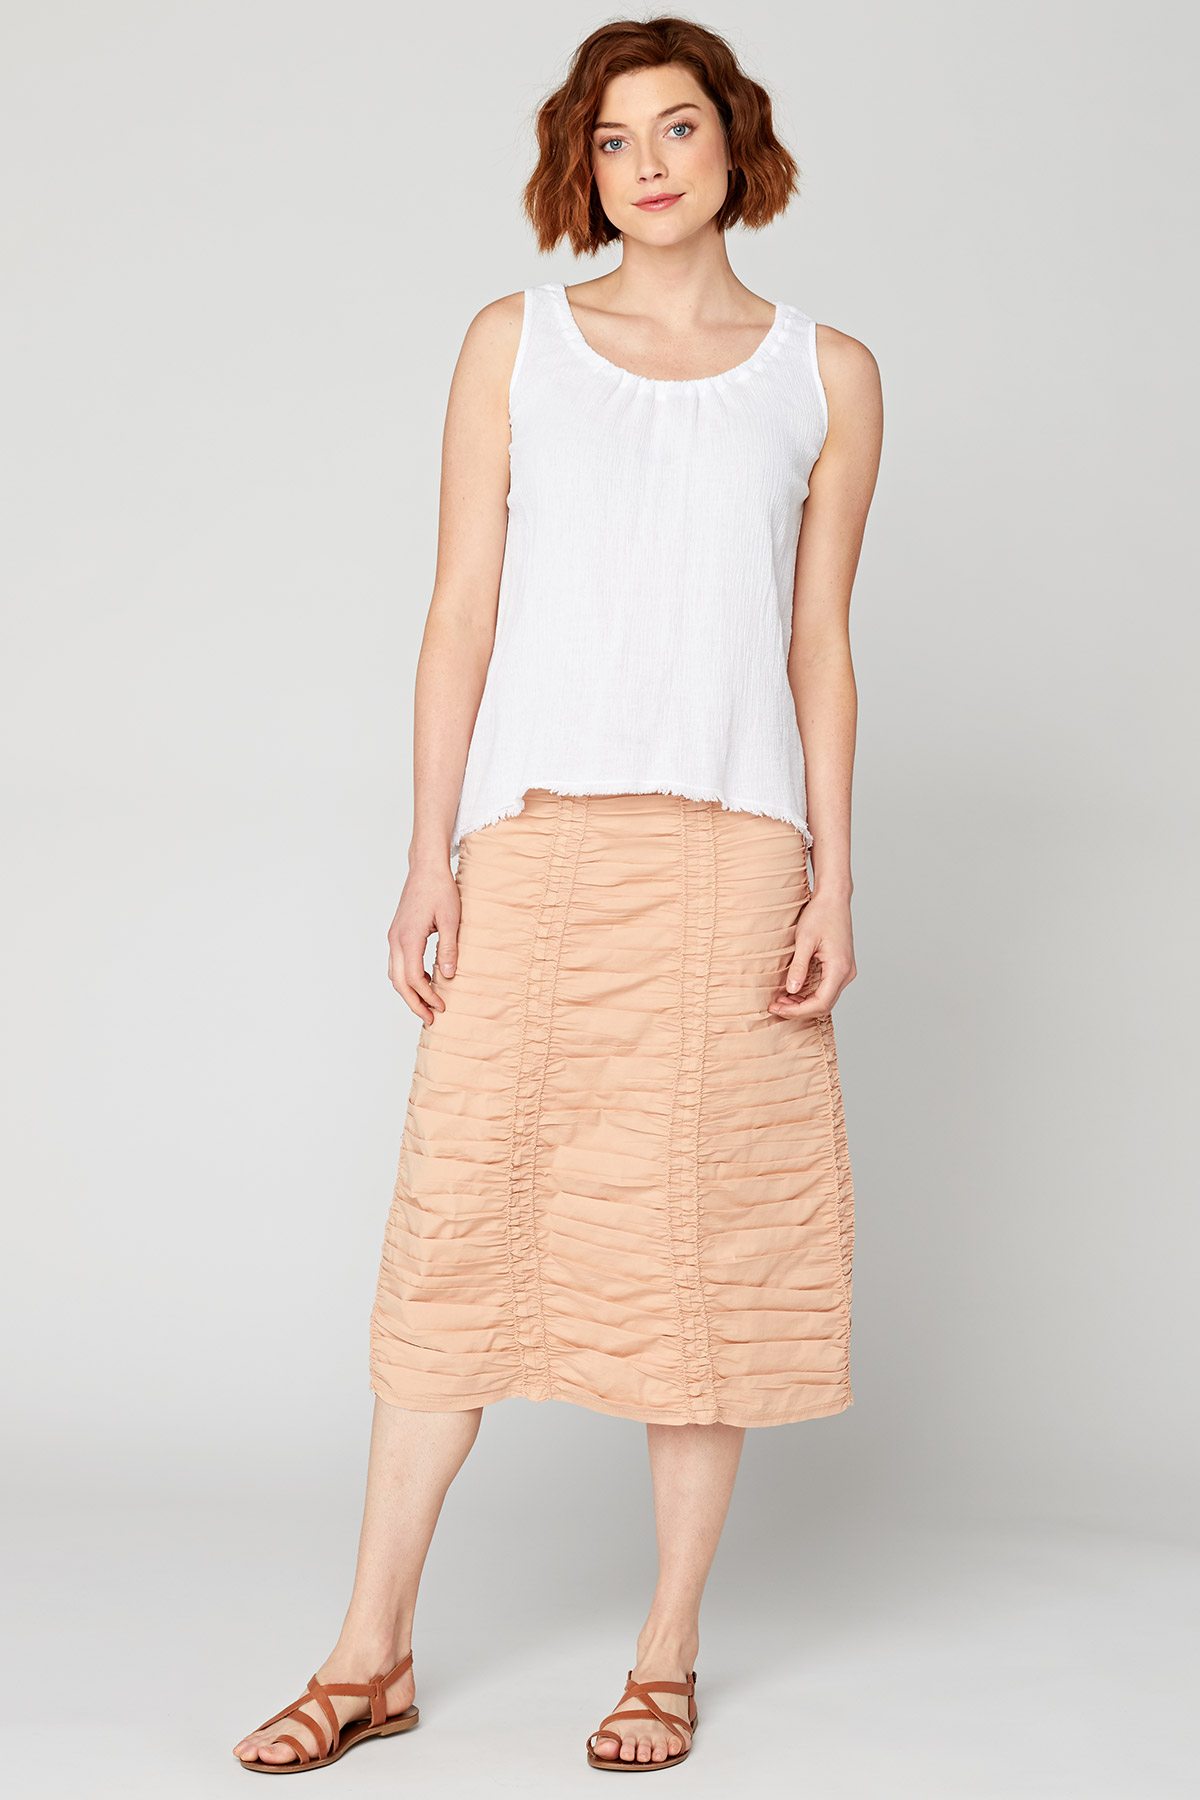 Wilma Top + Double Shirred Panel Skirt »